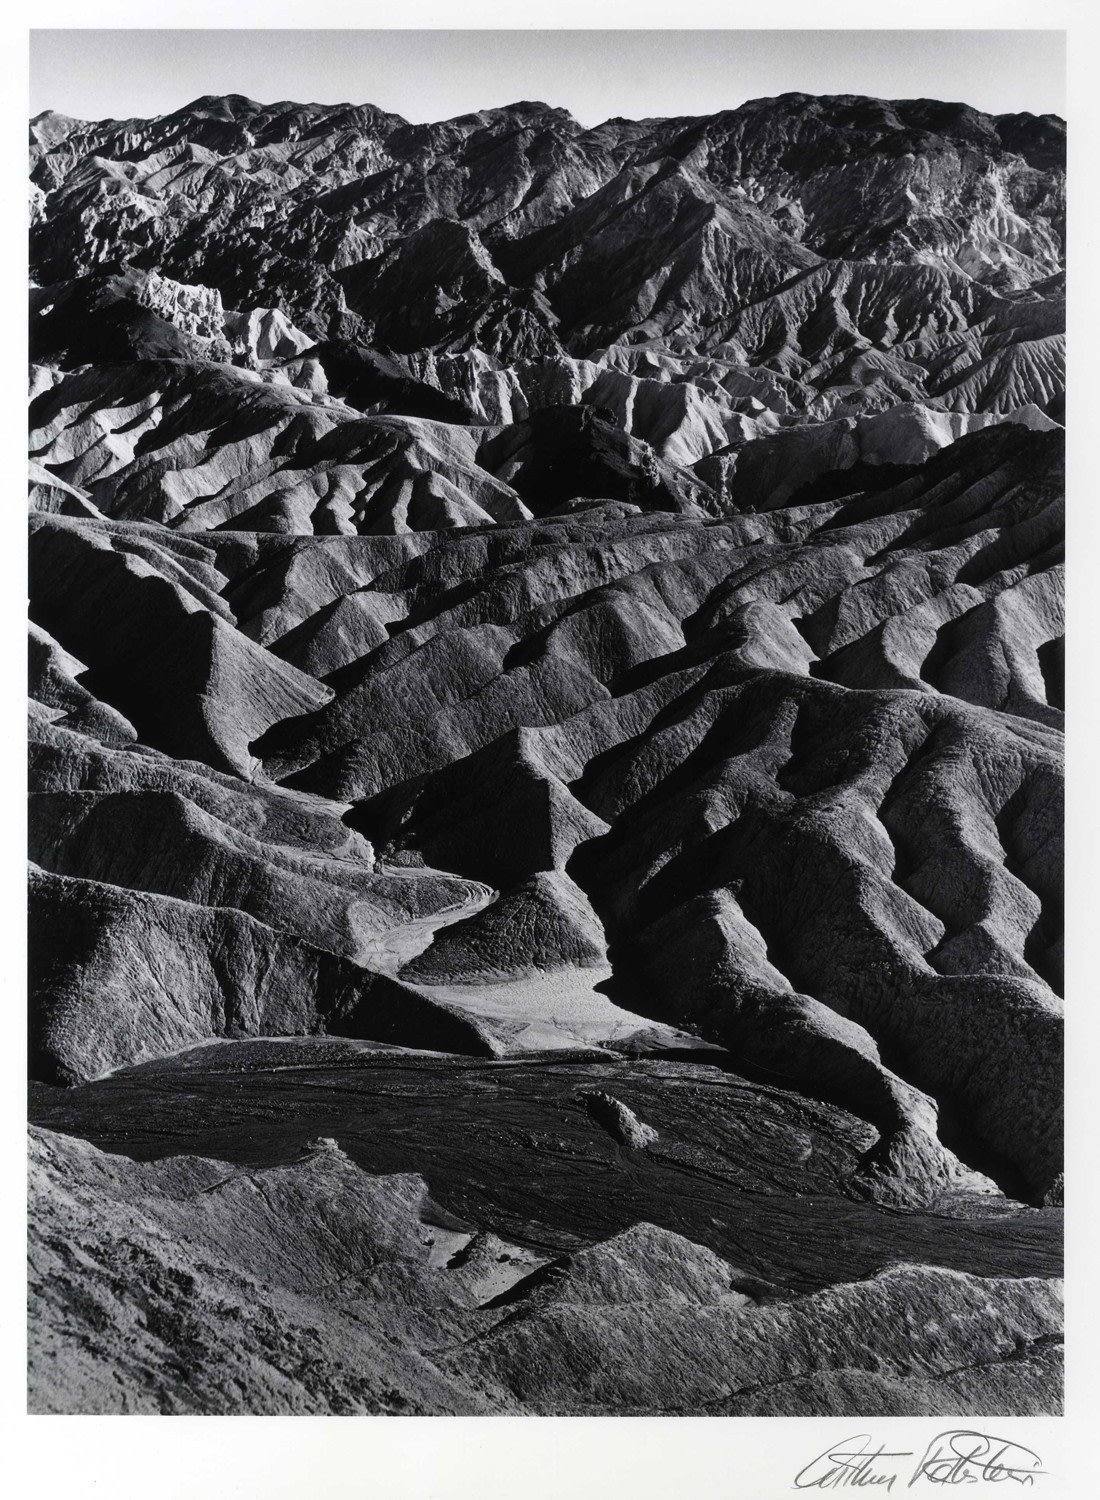 Arthur Rothstein Death Valley California, 1940